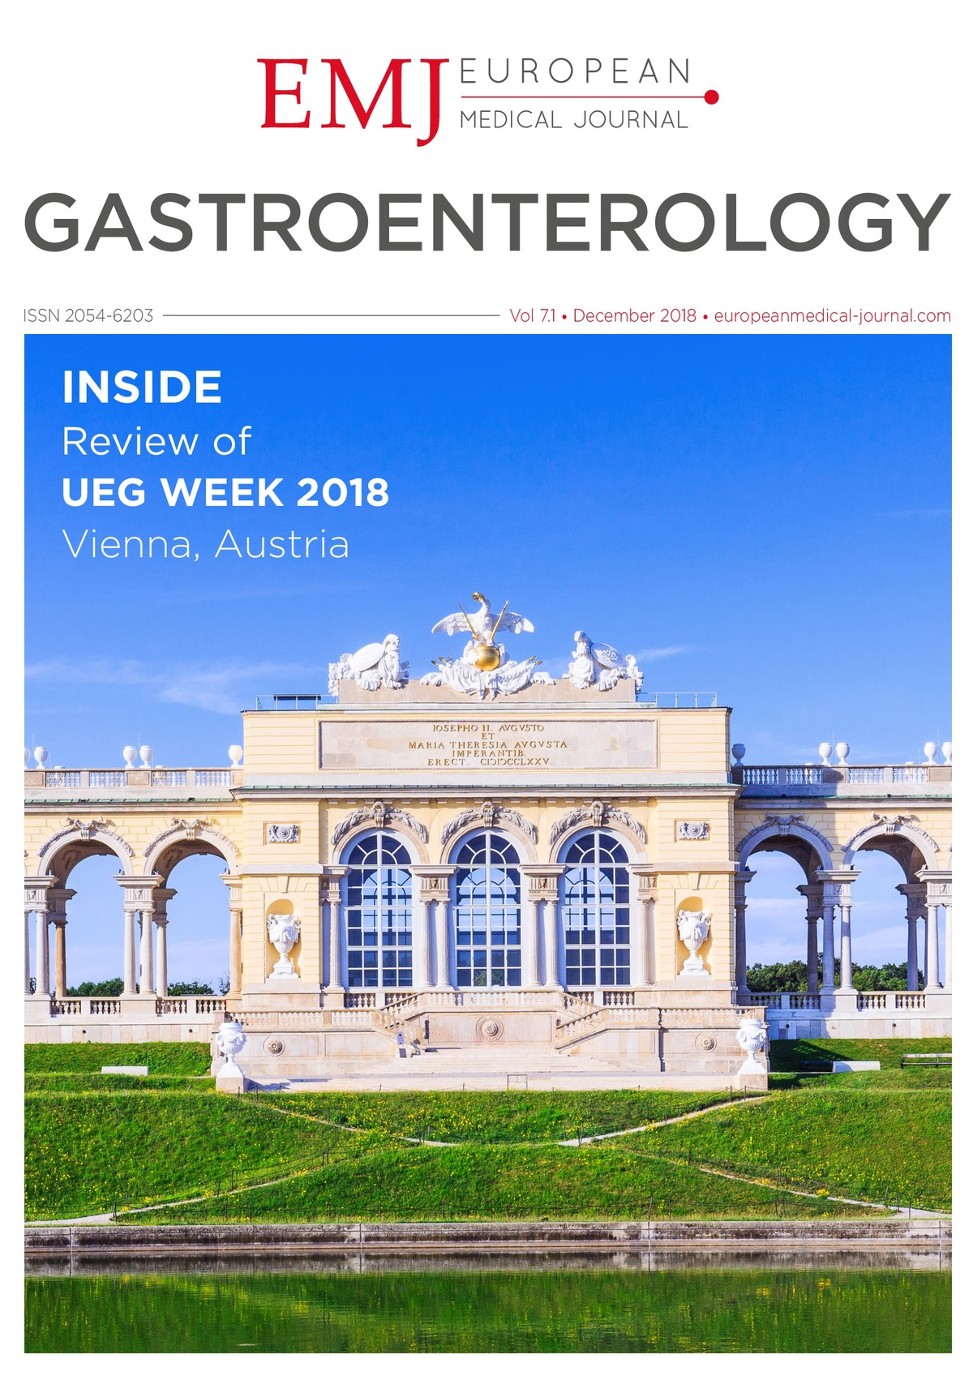 Emj Gastroenterology 71 2018 European Medical Journal